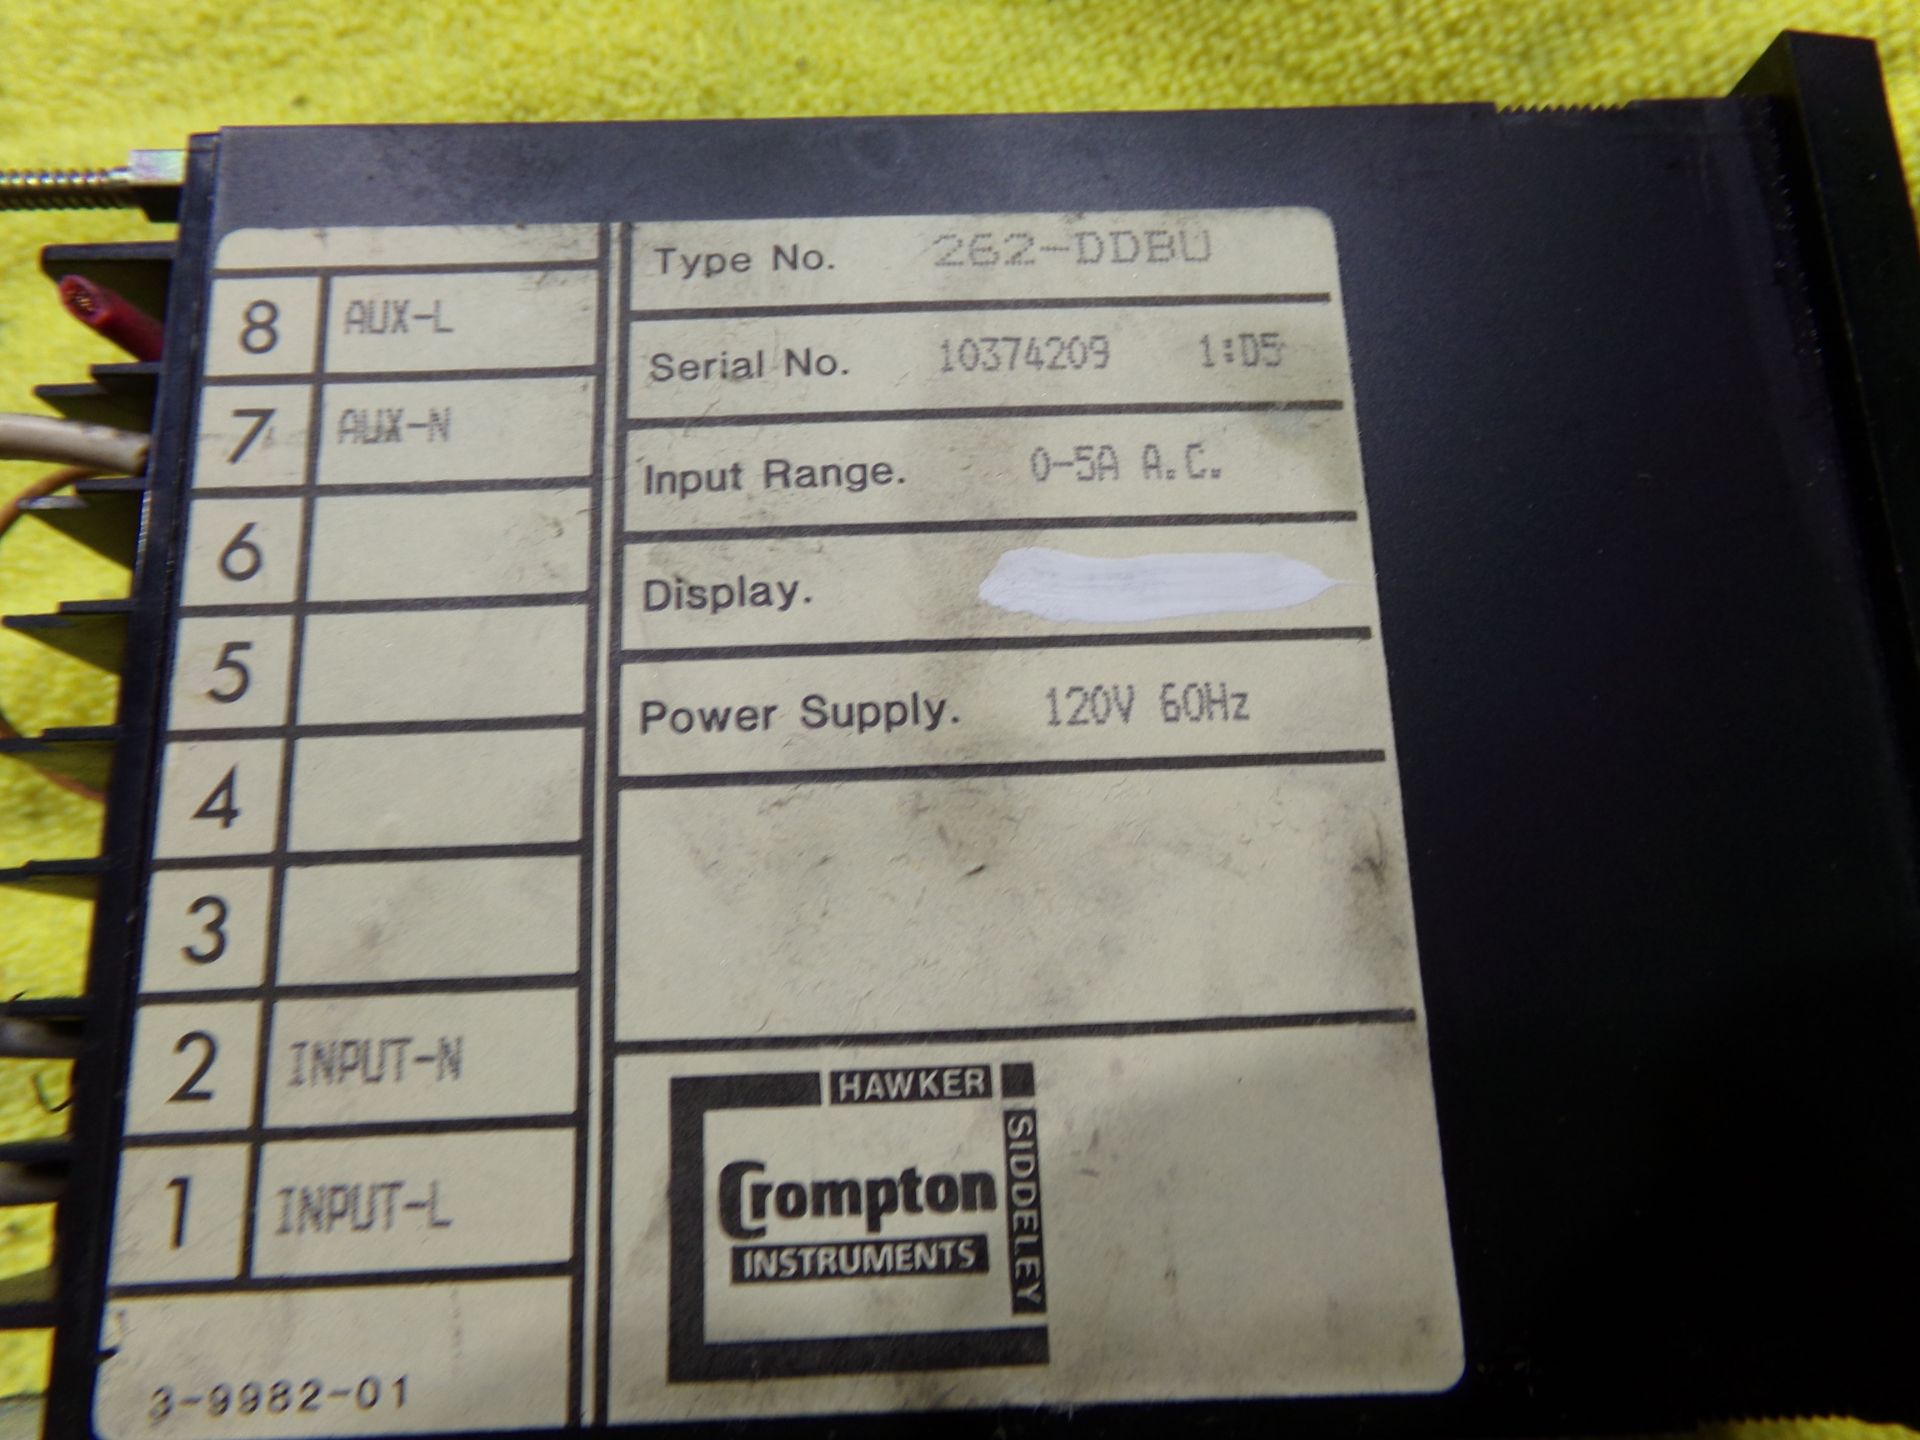 CROMPTON INSTRUMENTS E140758 LED DIGITAL PANEL METER 262DDBU 0-5A AC INPUT 0-150 DISPLAY 120V 60HZ - Image 5 of 6